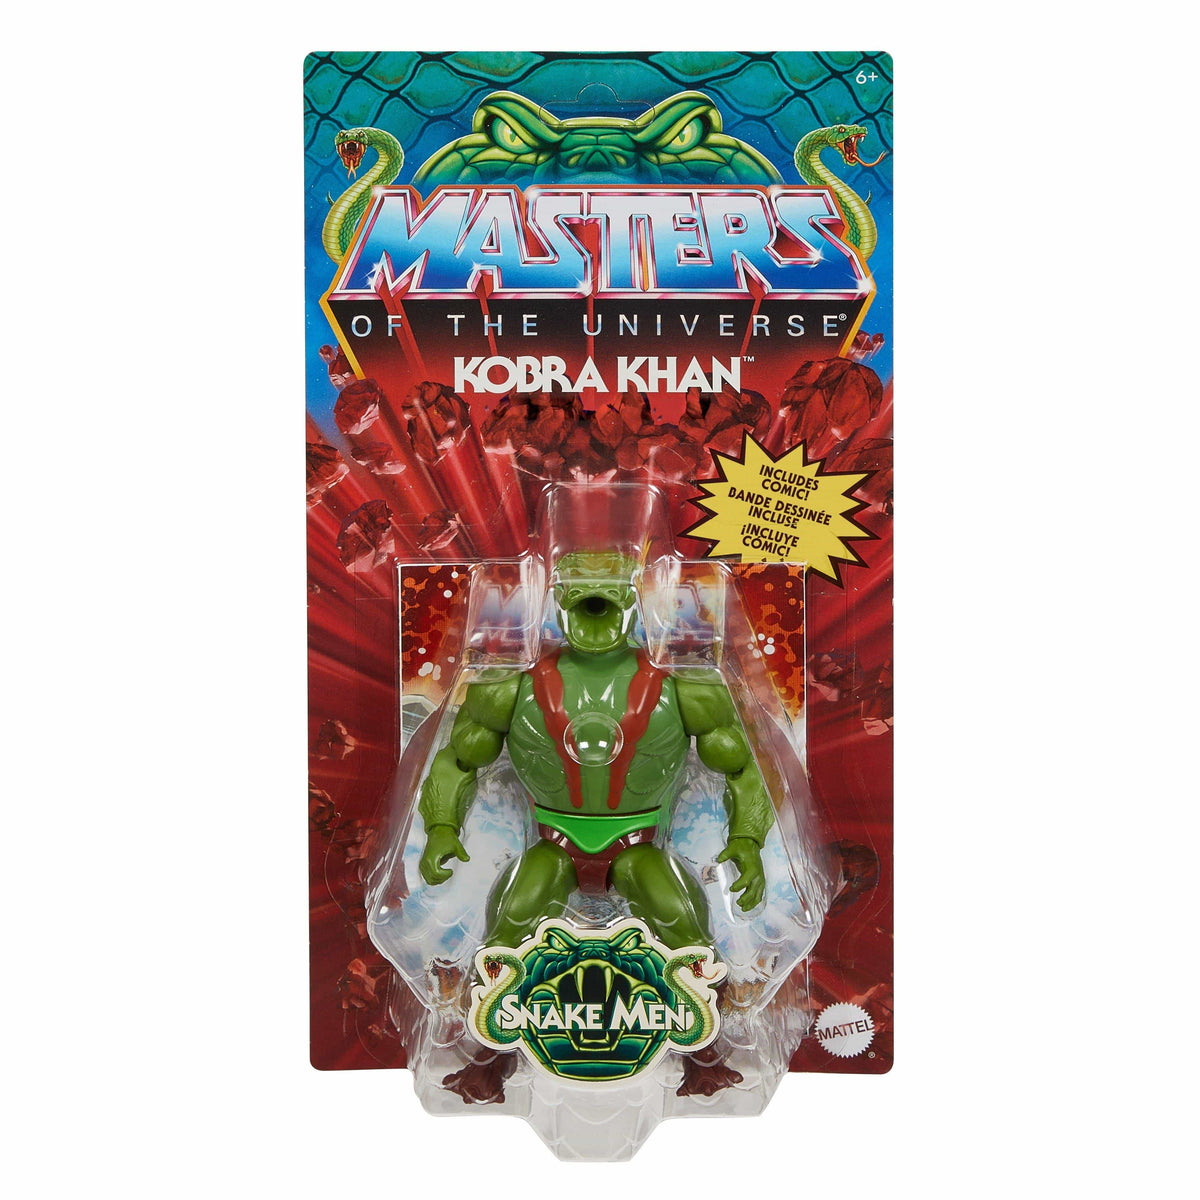 Mattel: Masters of the Universe - Kobra Khan - Third Eye